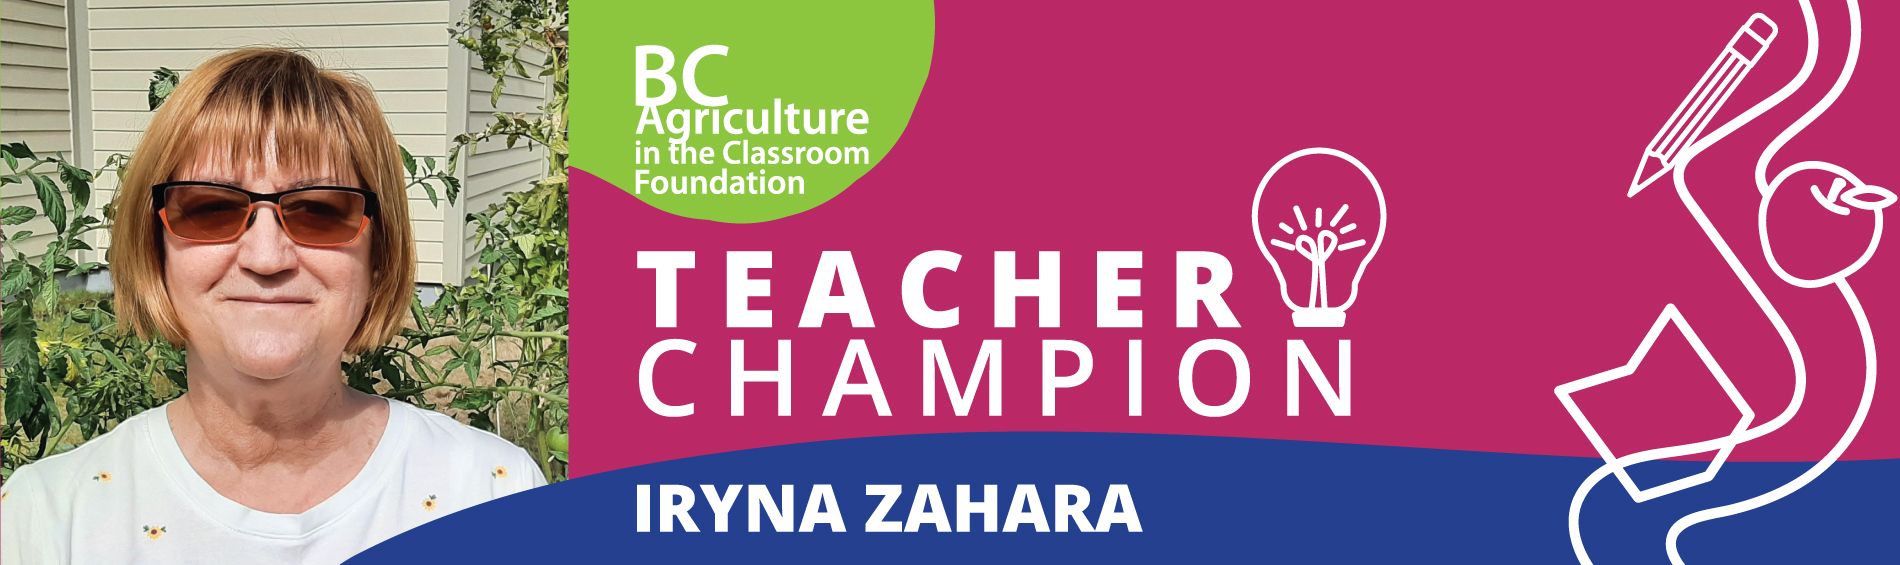 Teacher Champion - Iryna Zahara